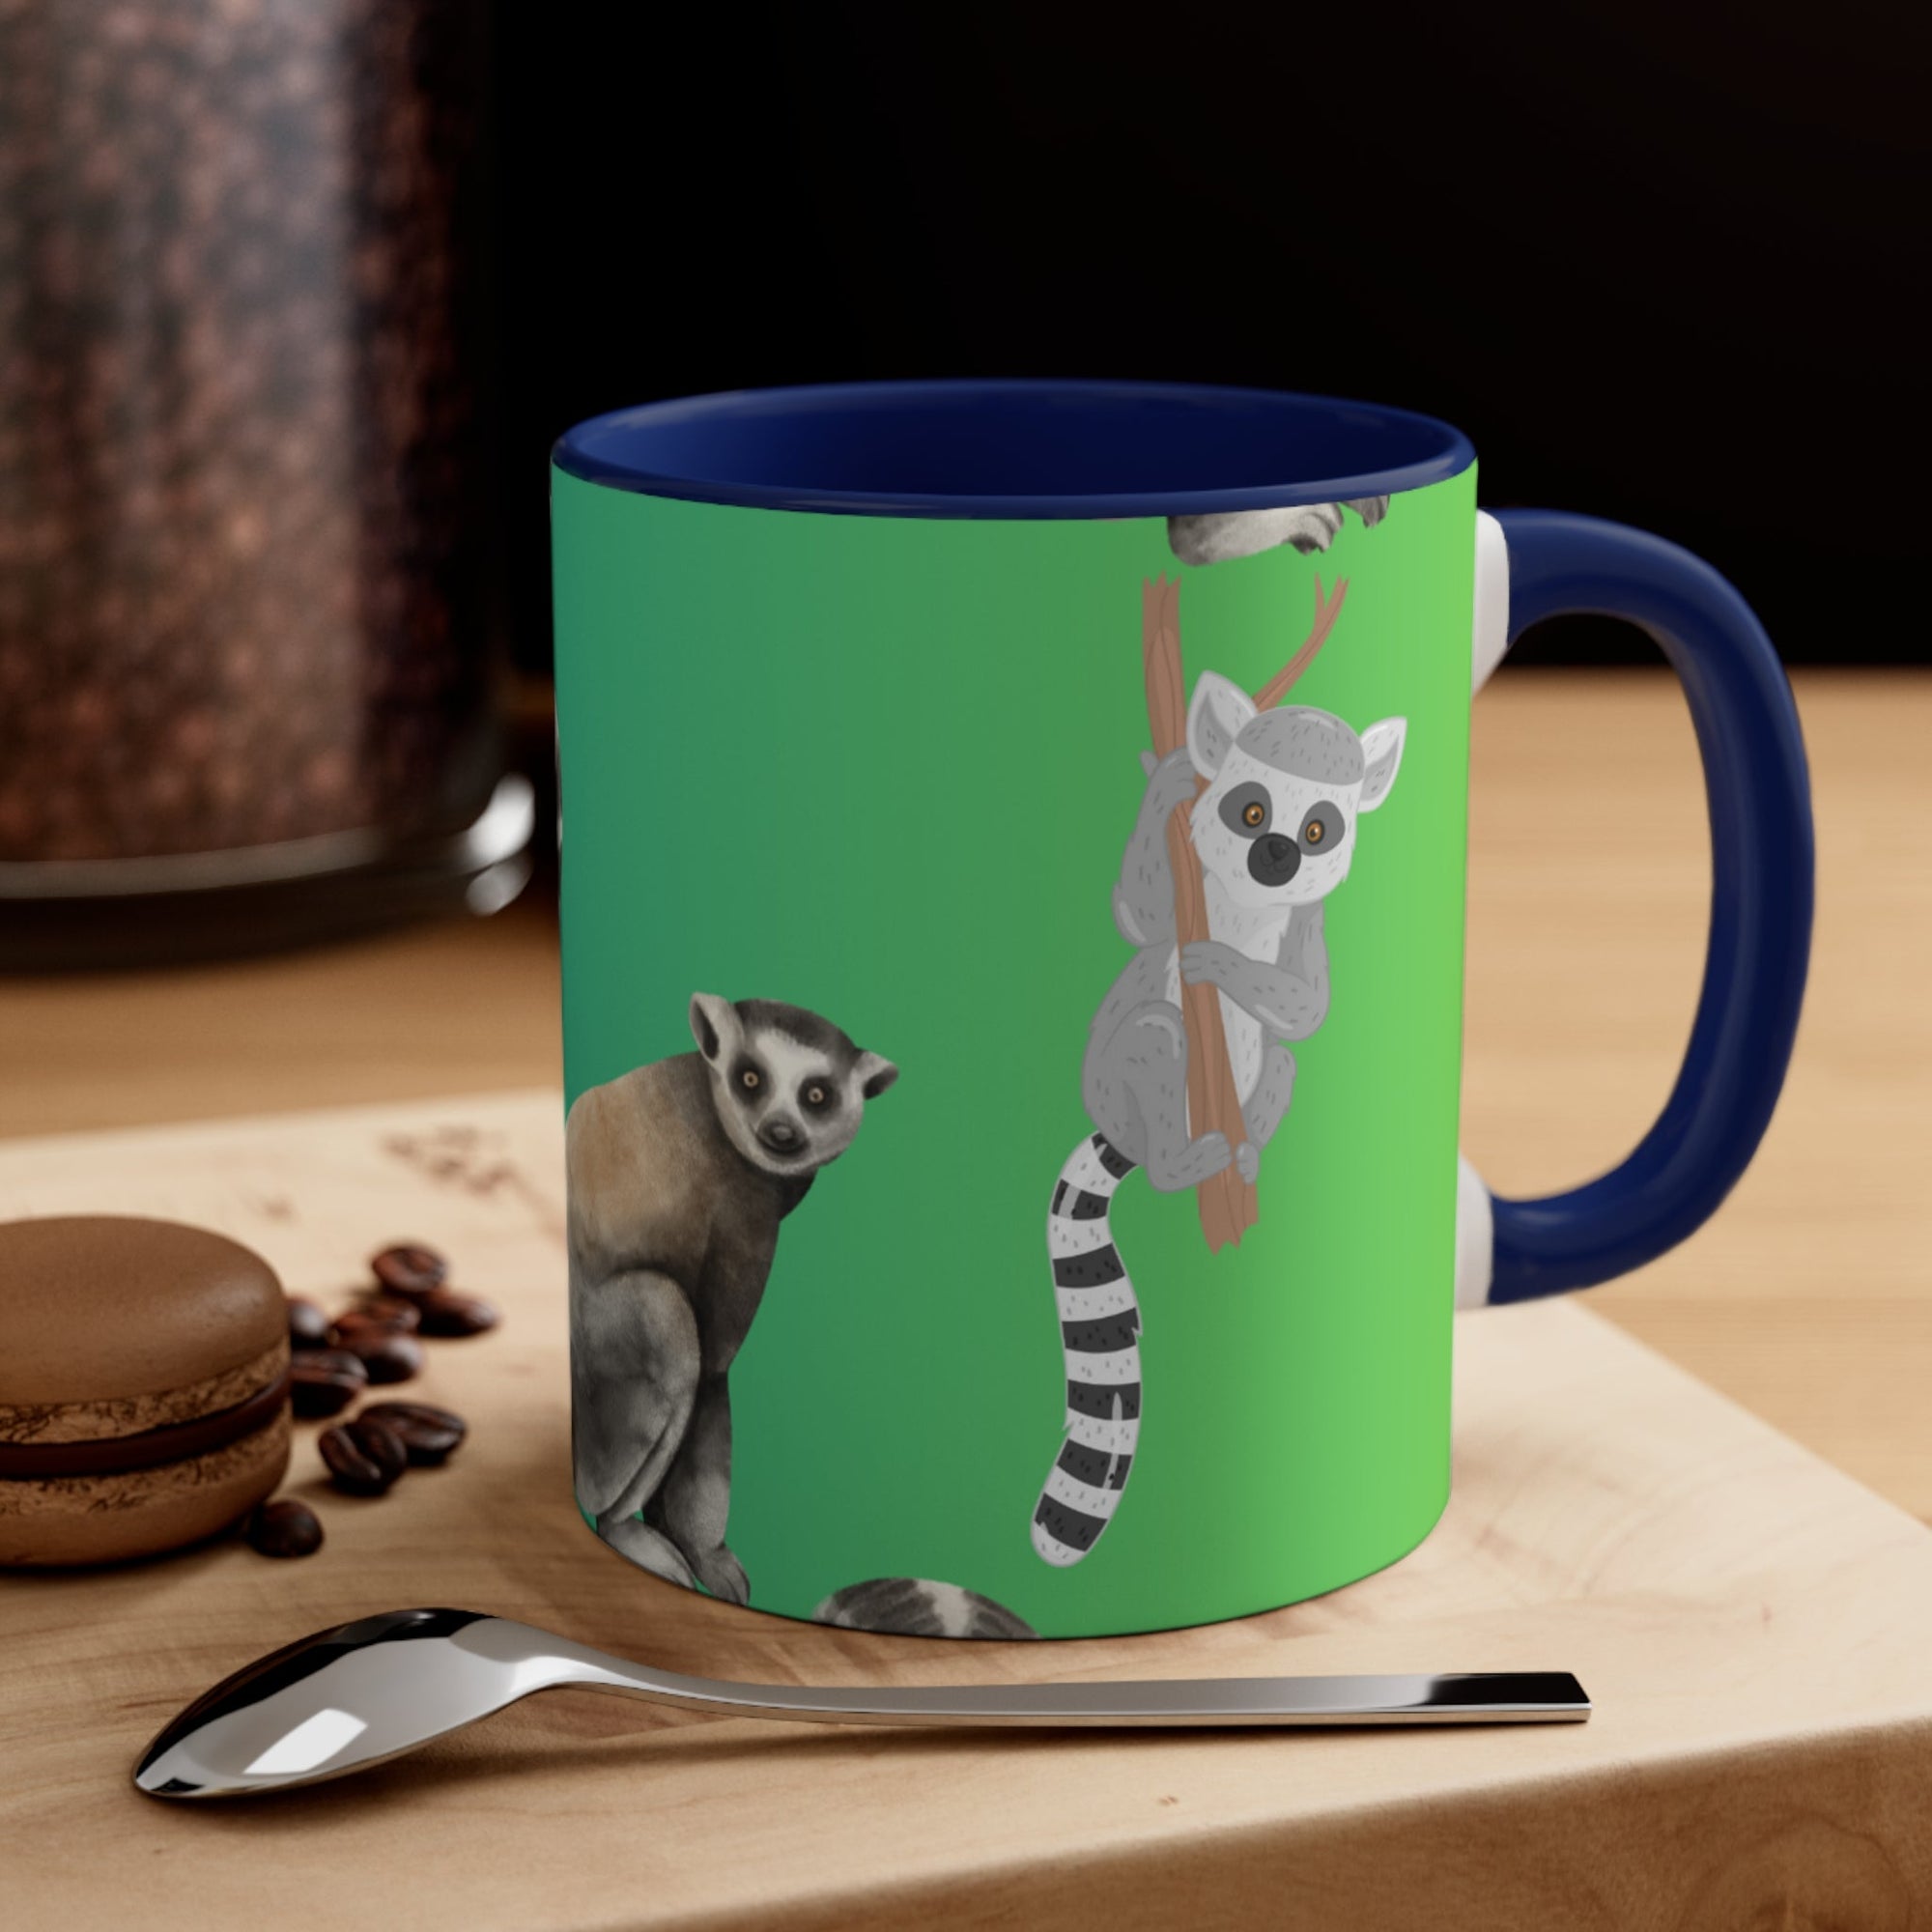 Accent Coffee Mug, 11oz - Iconic Indri Lemur - Primation